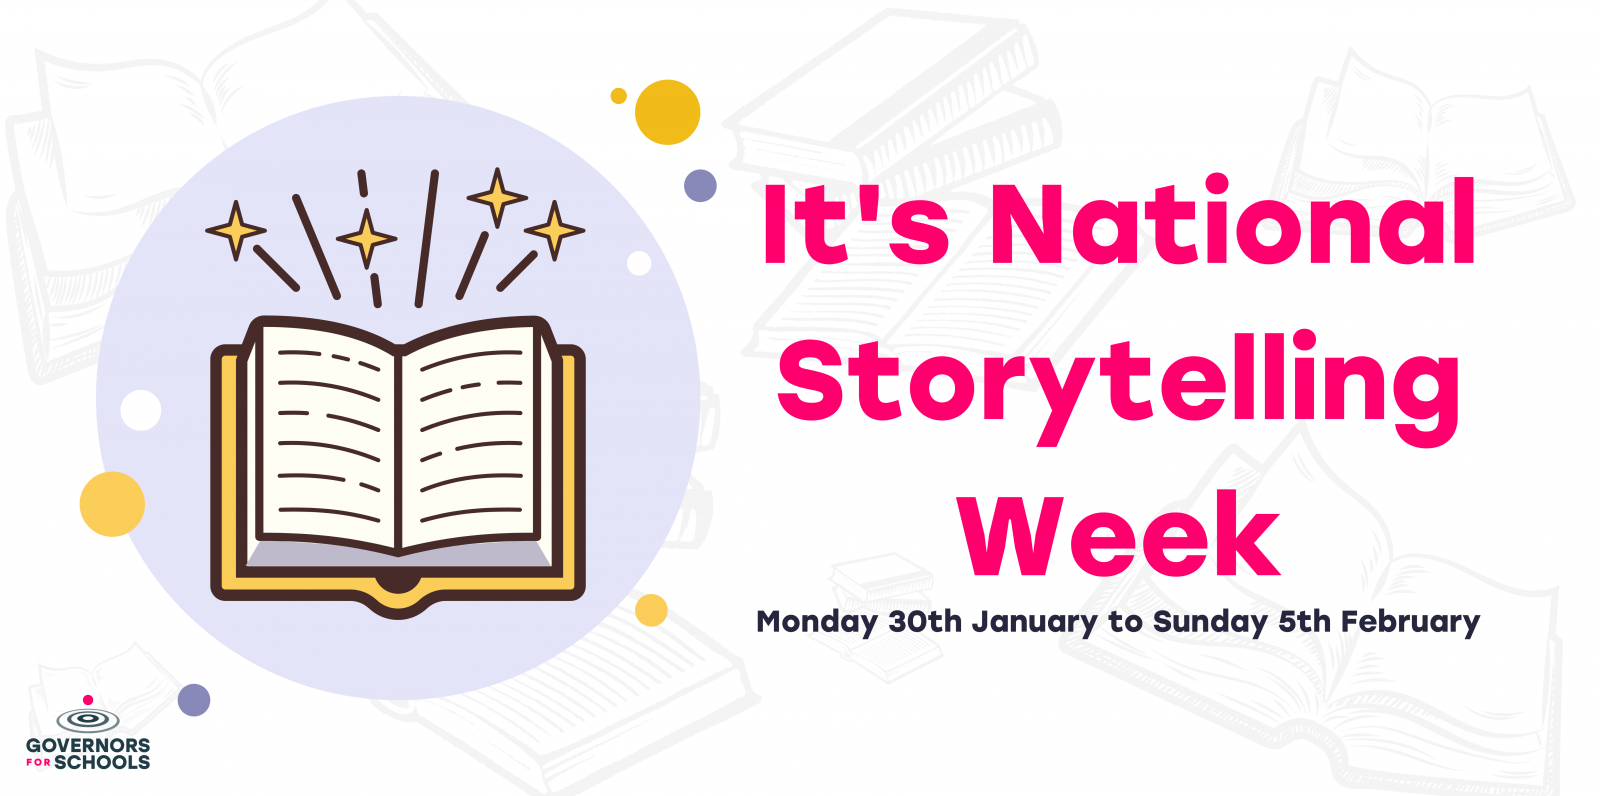 Feed pupils’ imaginations this National Storytelling Week